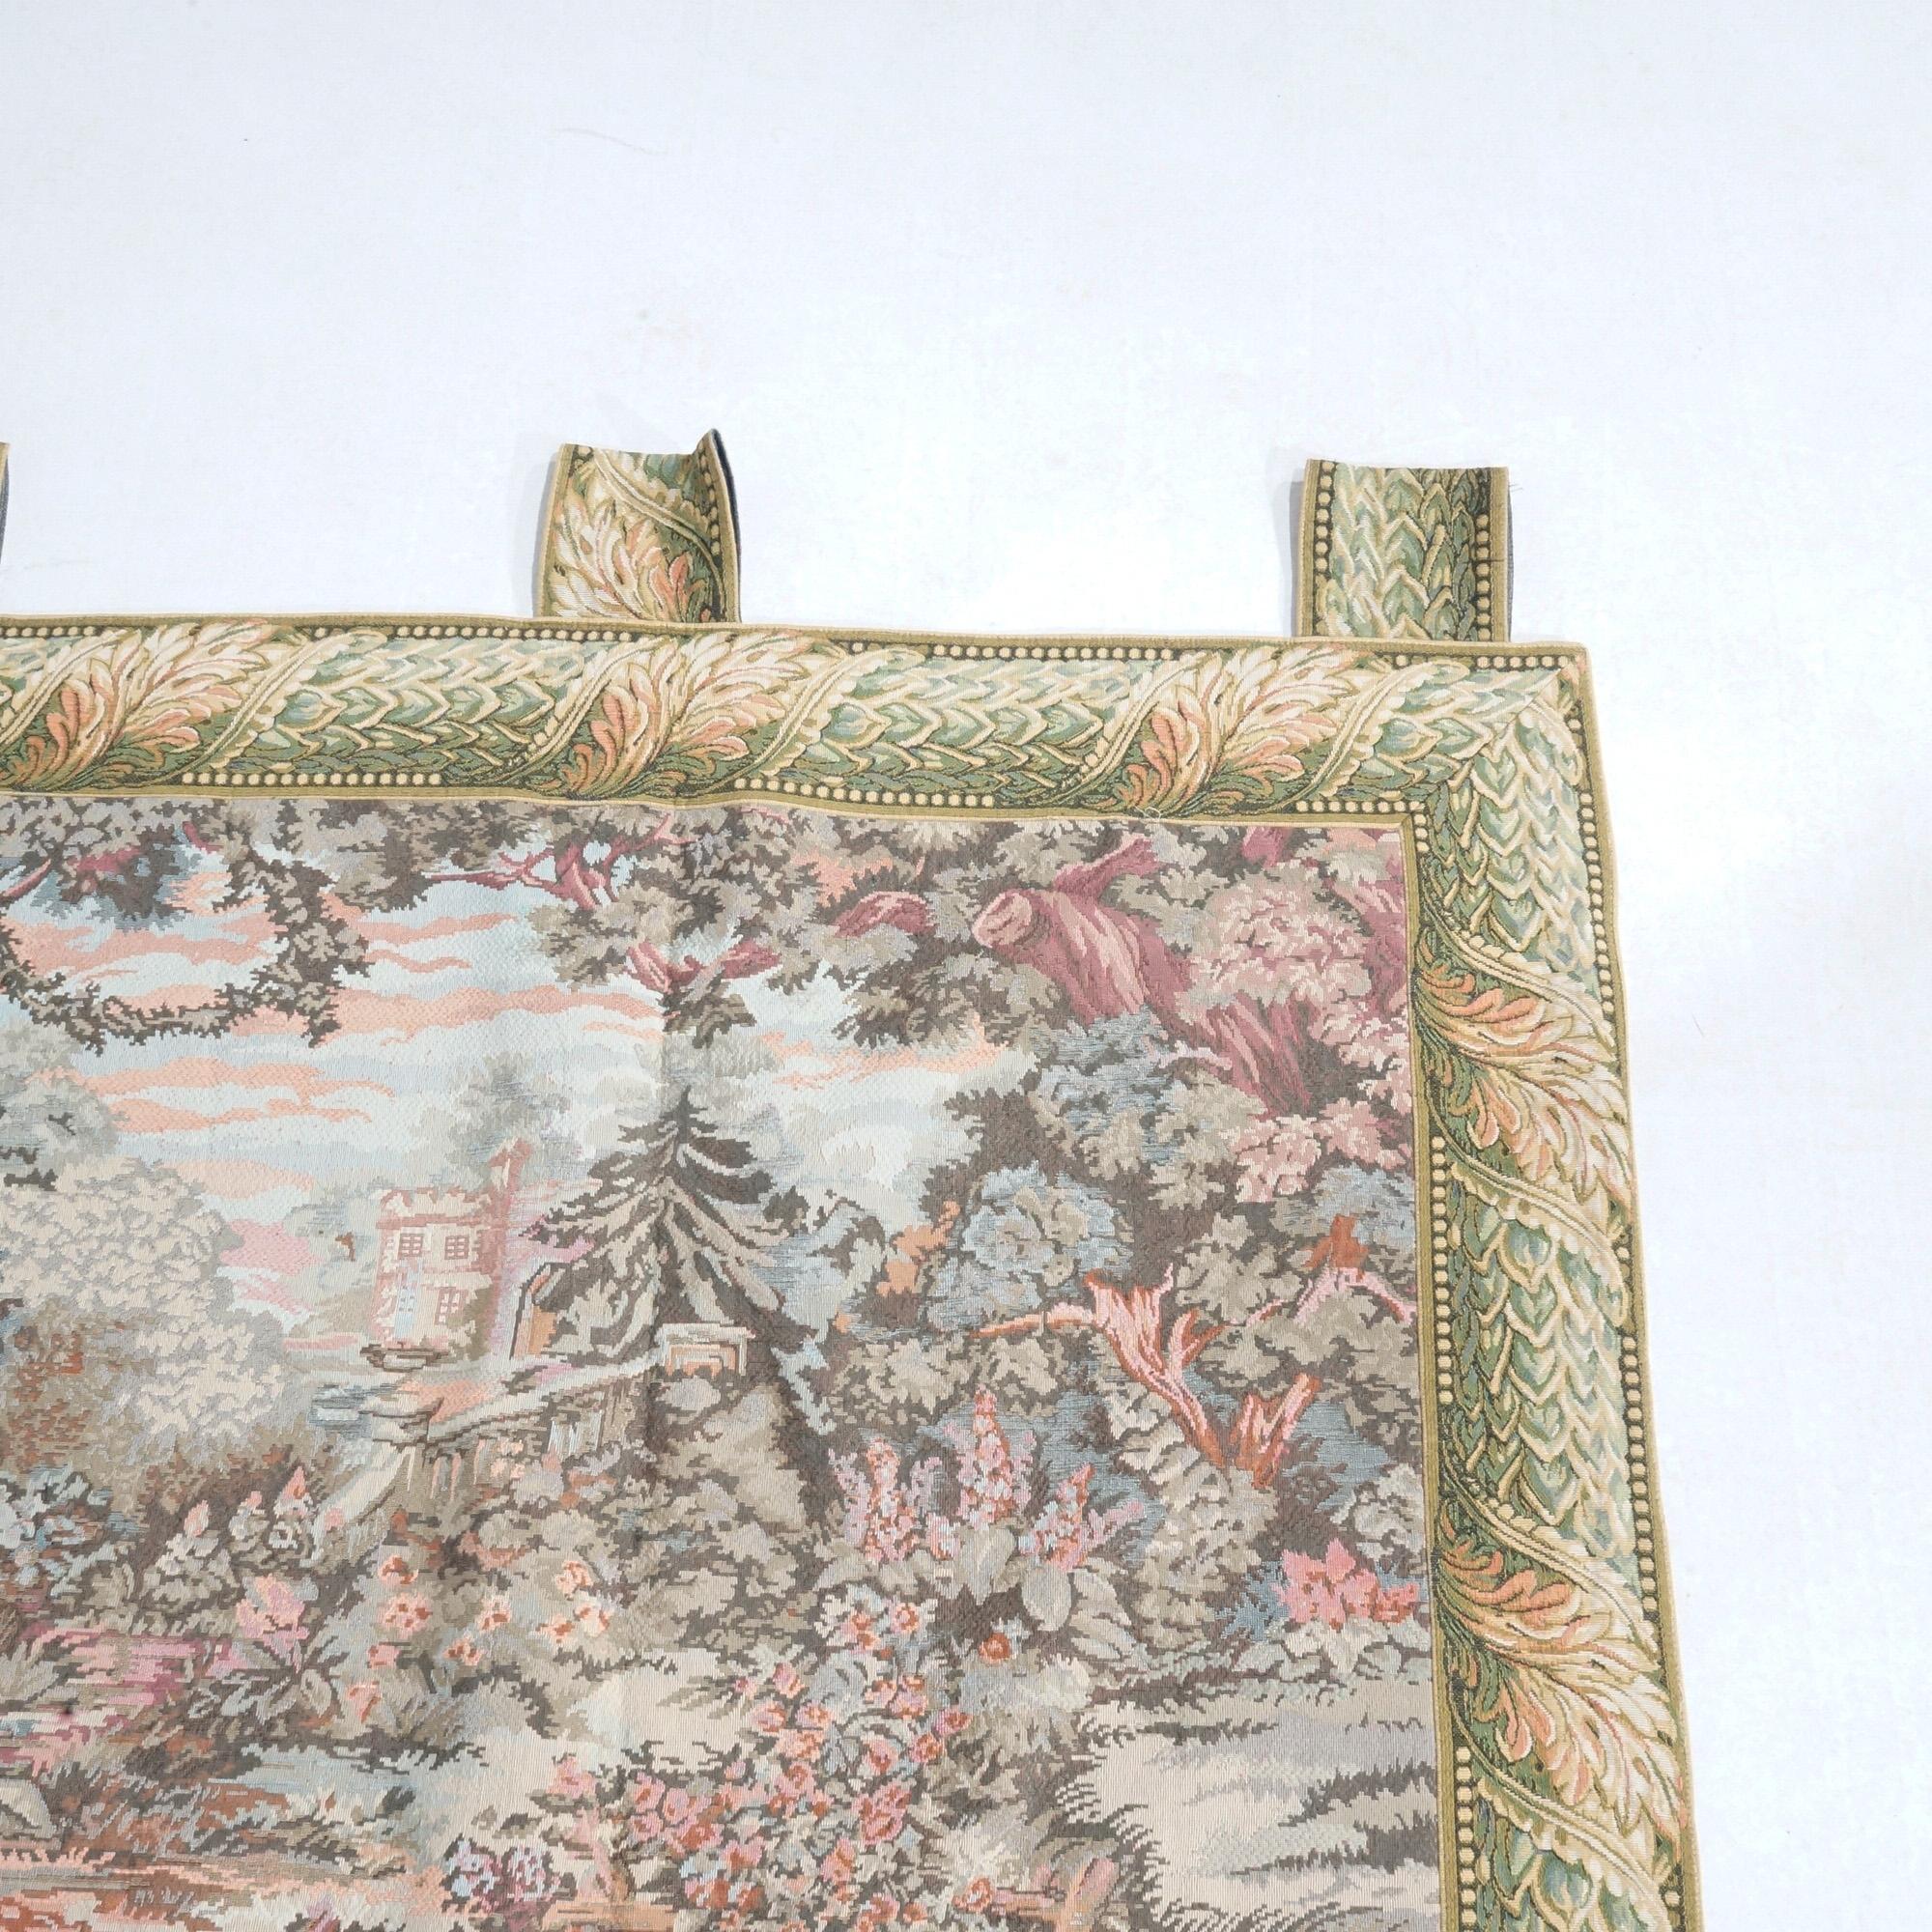 Textile Contemporary Greco-Roman Scenic Landscape Wall Tapestry 20th Century For Sale